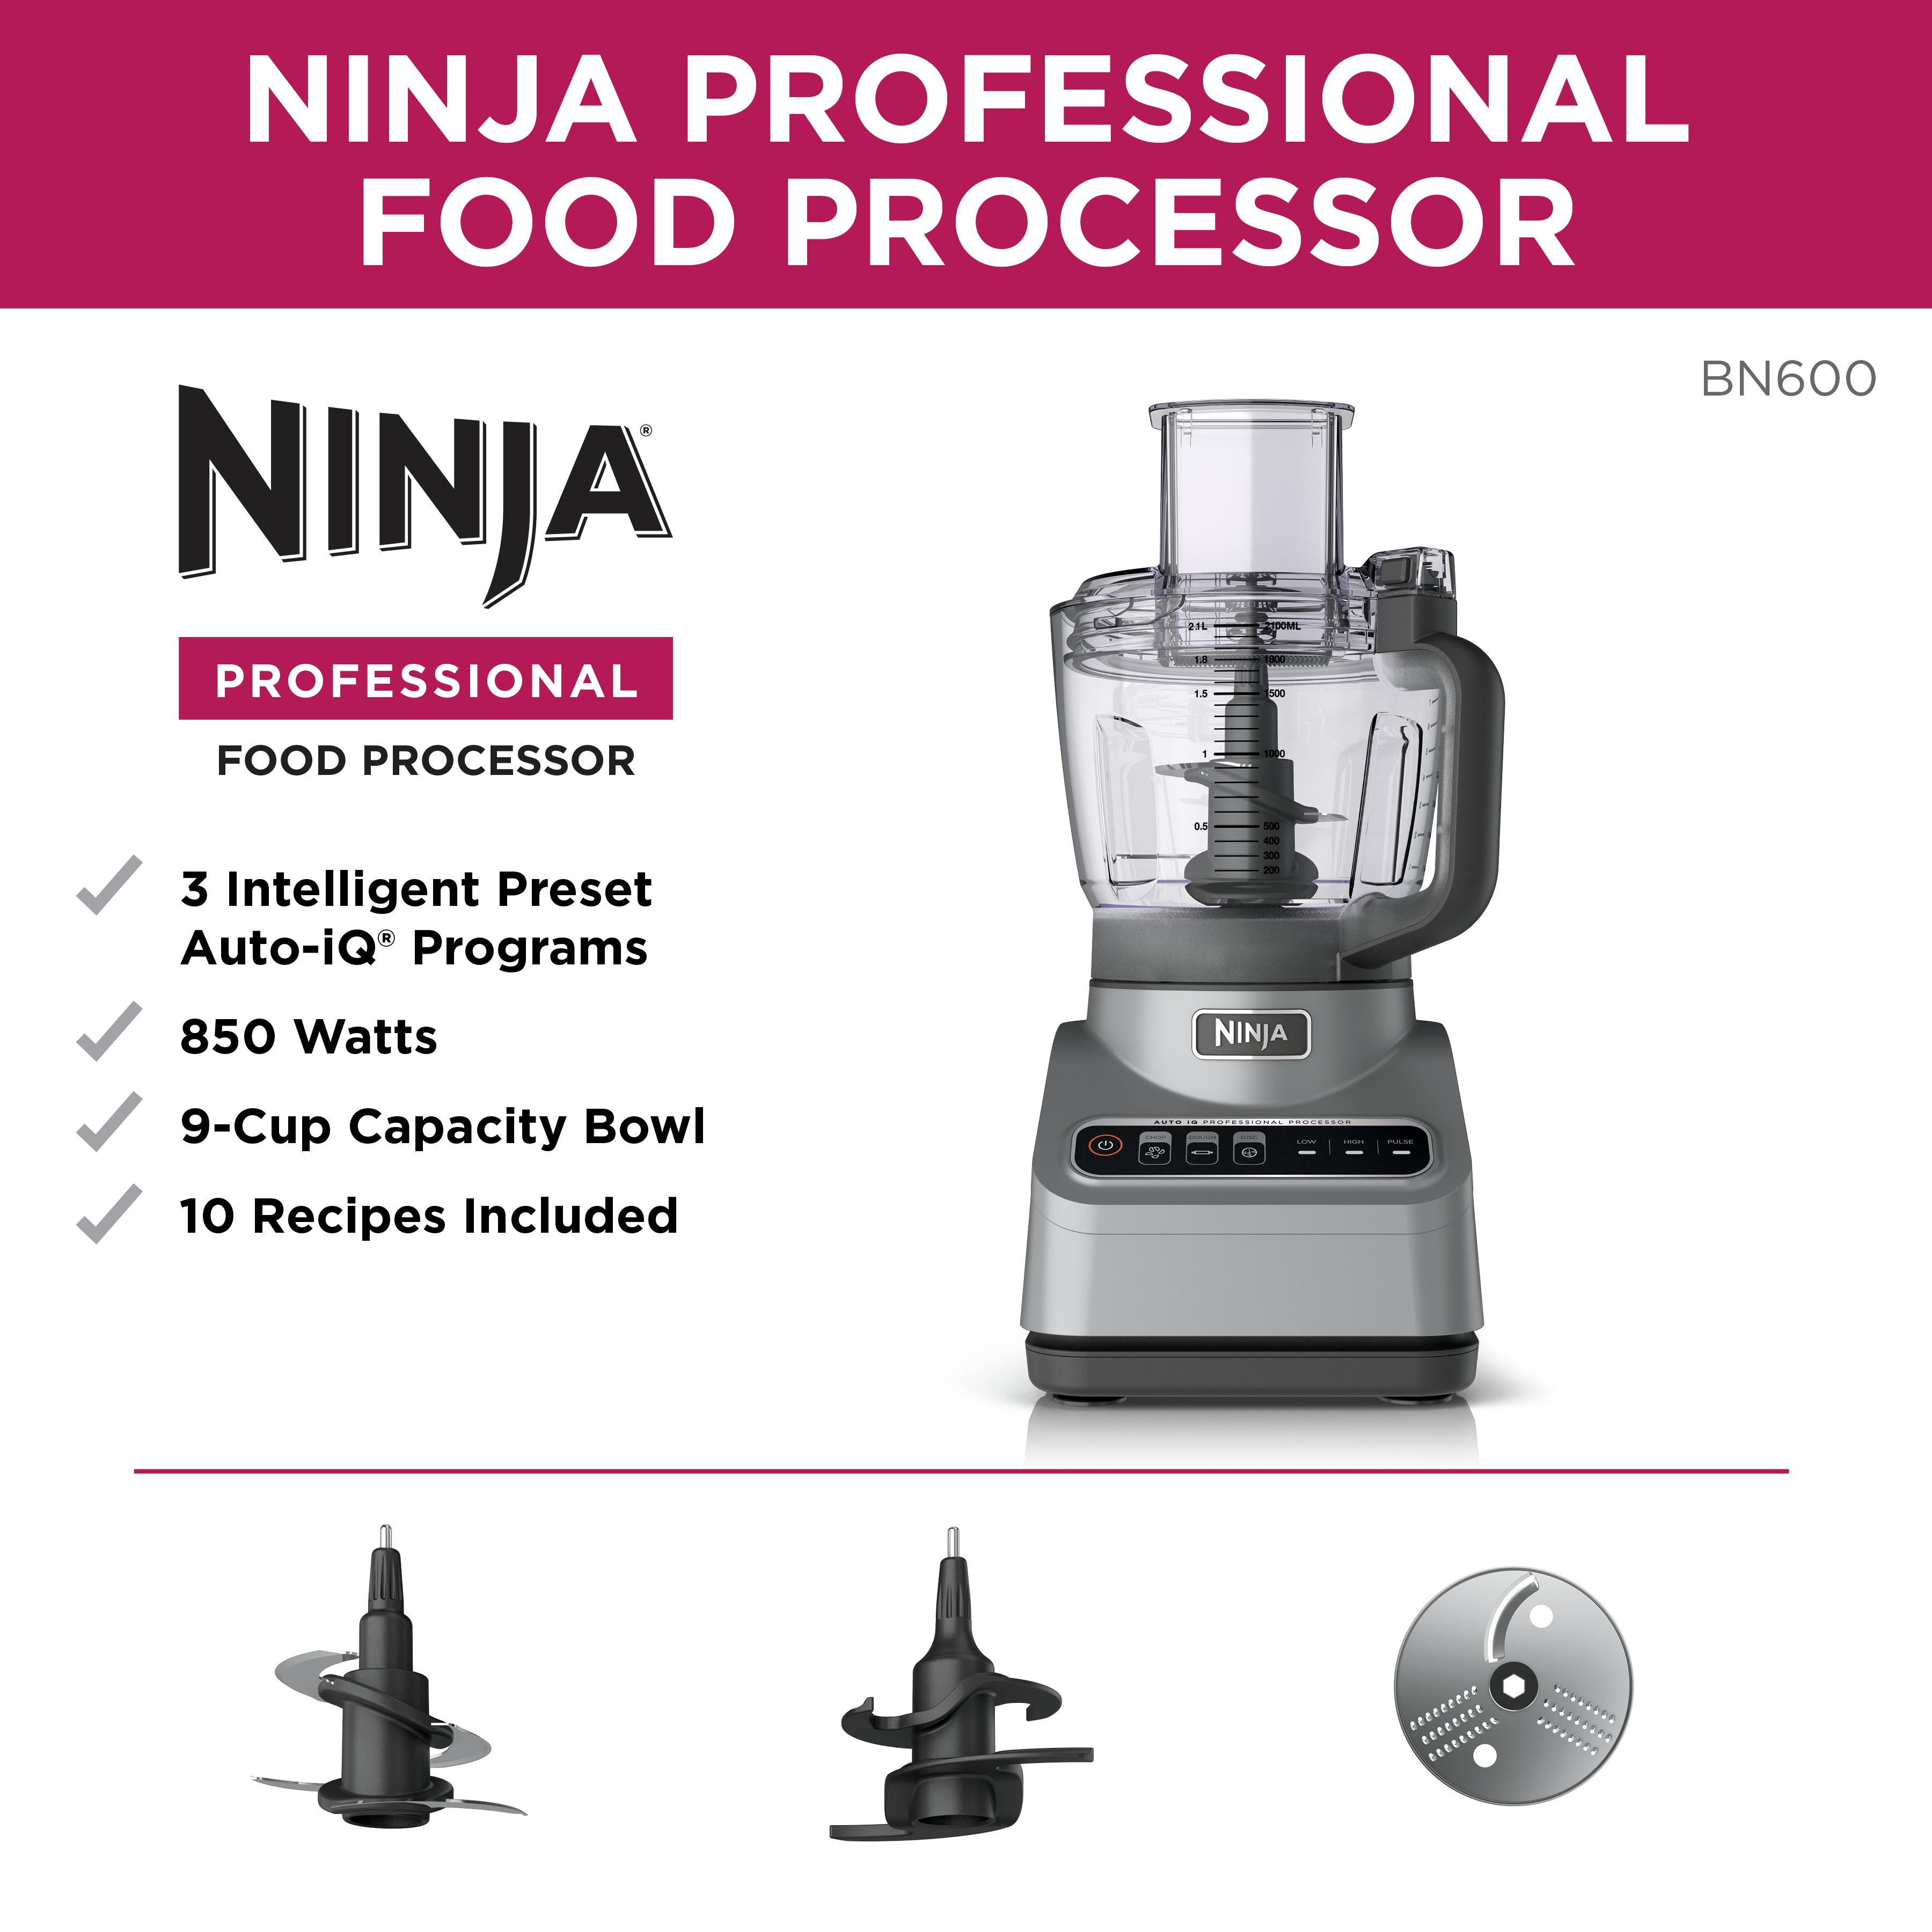 Ninja® Professional Food Processor, 850 Watts, 9-Cup Capacity, Auto-iQ Preset Programs, BN600 - image 4 of 12